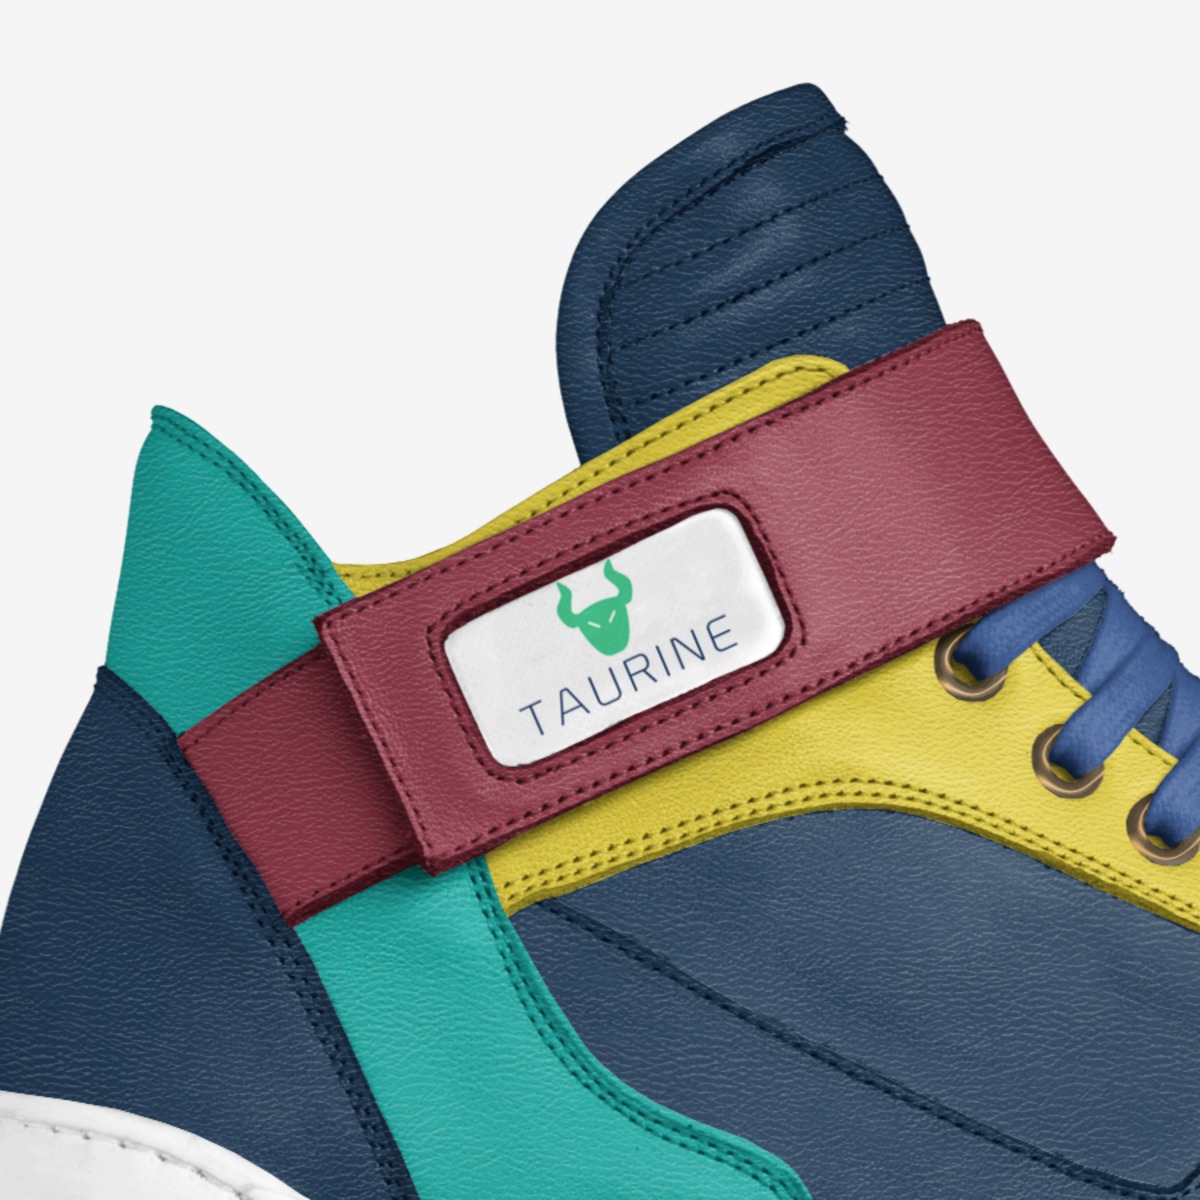 TAURINE  A Custom Shoe concept by Ricky Ricky